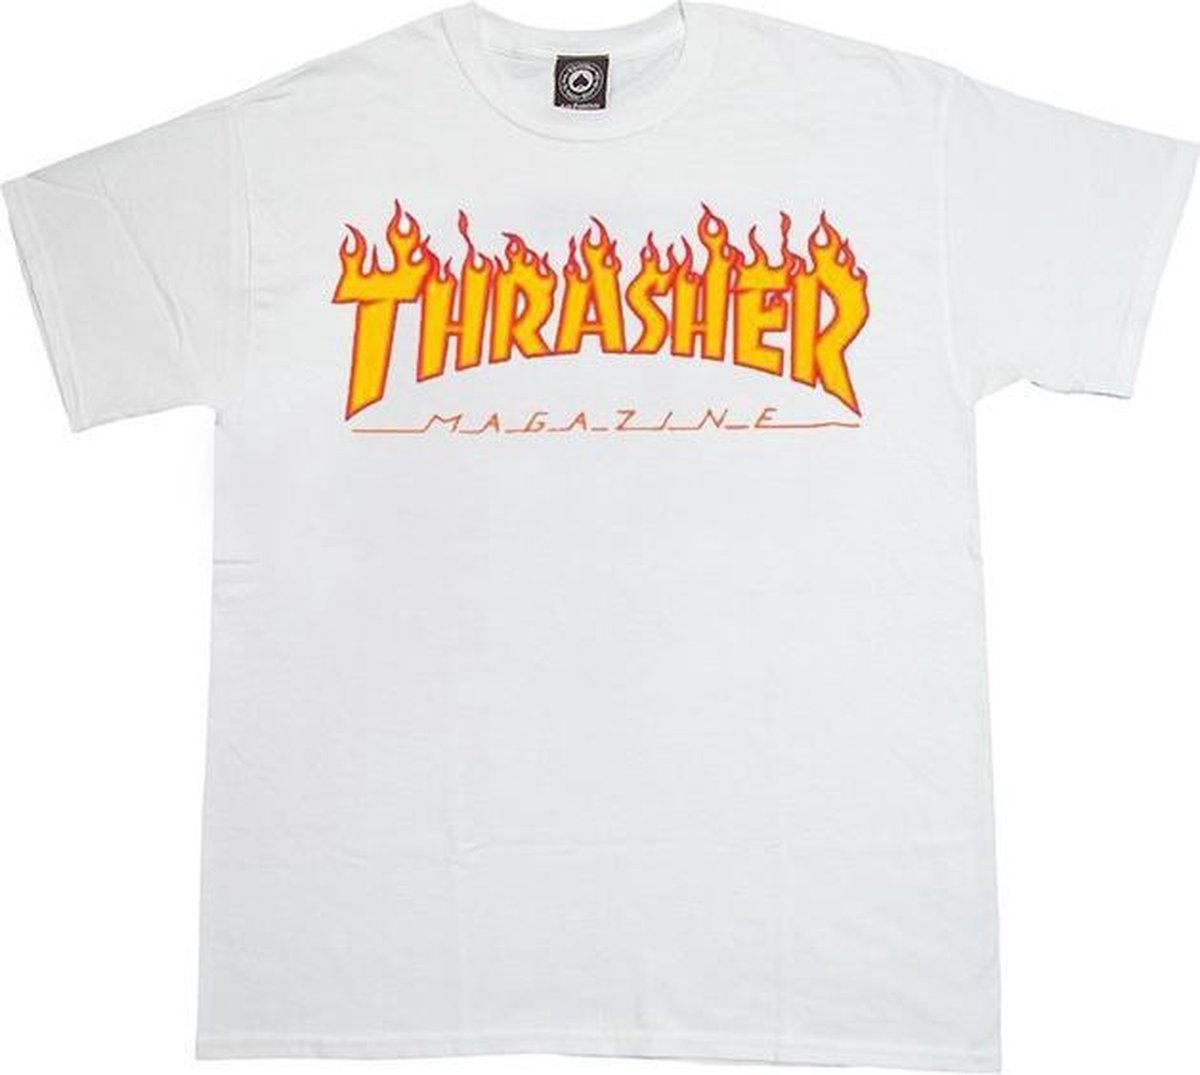 THRASHER - FLAME T-SHIRT WHITE